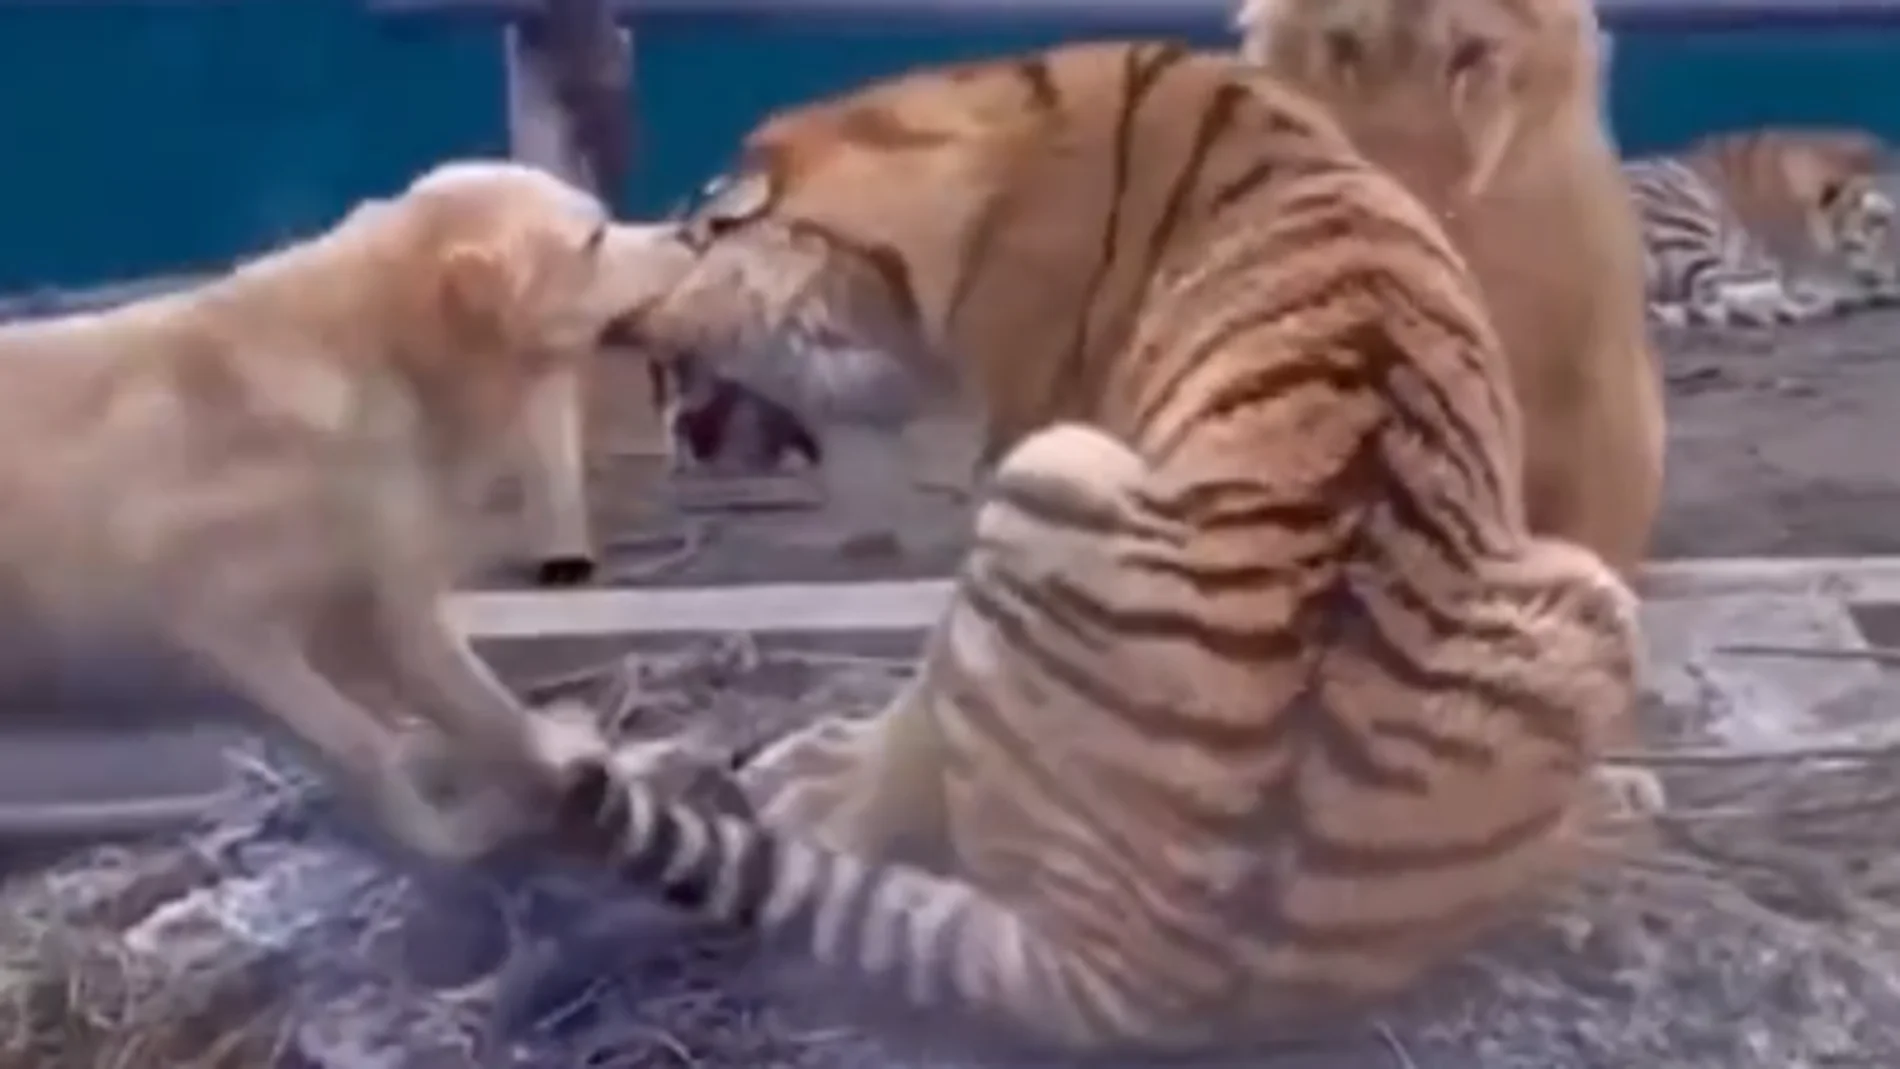 La emotiva historia detrás del vídeo viral de una perrita que se enfrenta a un tigre para defender a un león